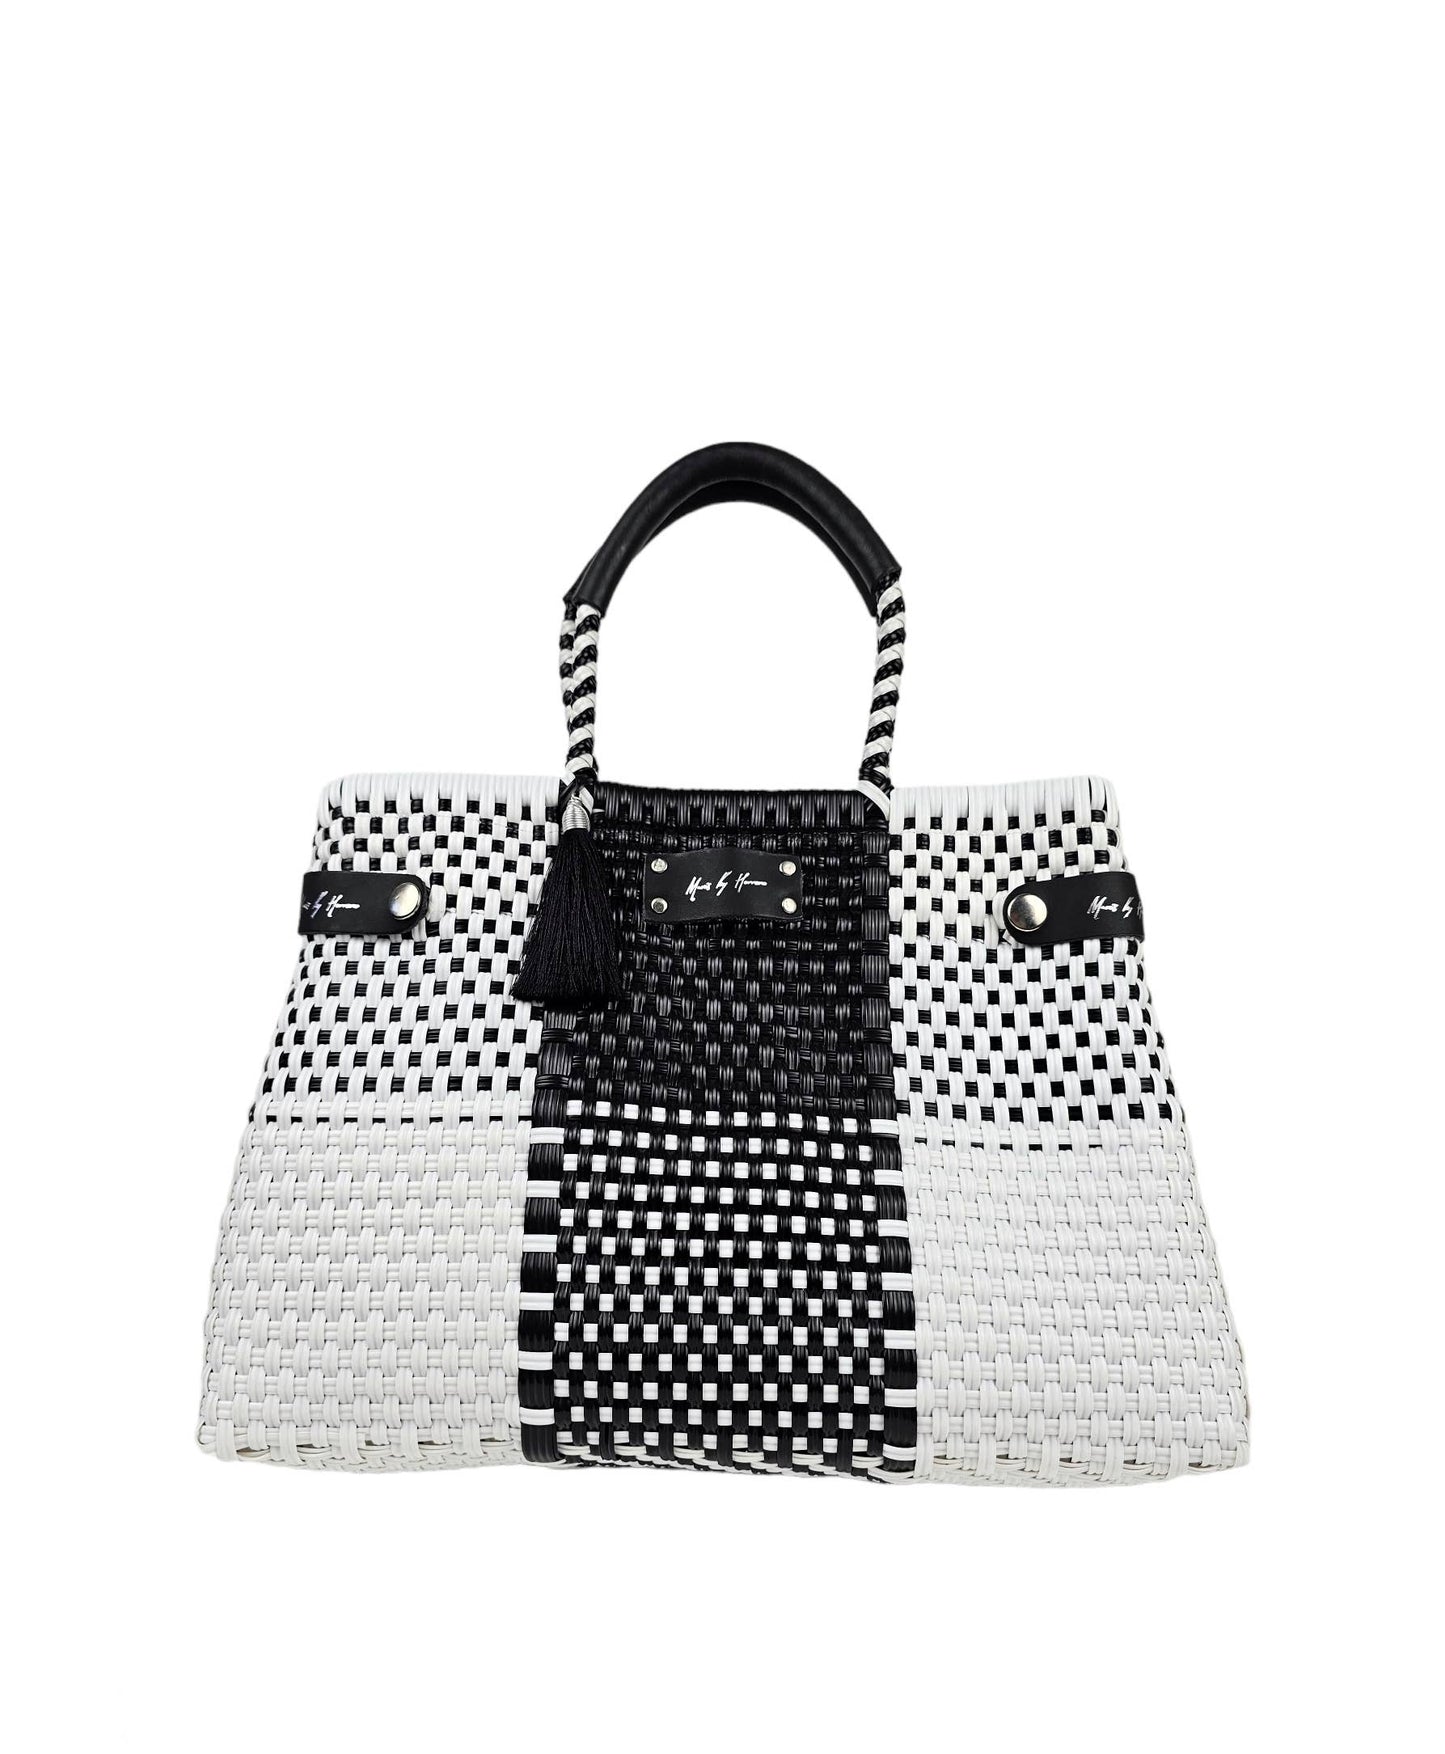 Mavis by Herrera - Less Pollution Convertible Handbag - Black & White